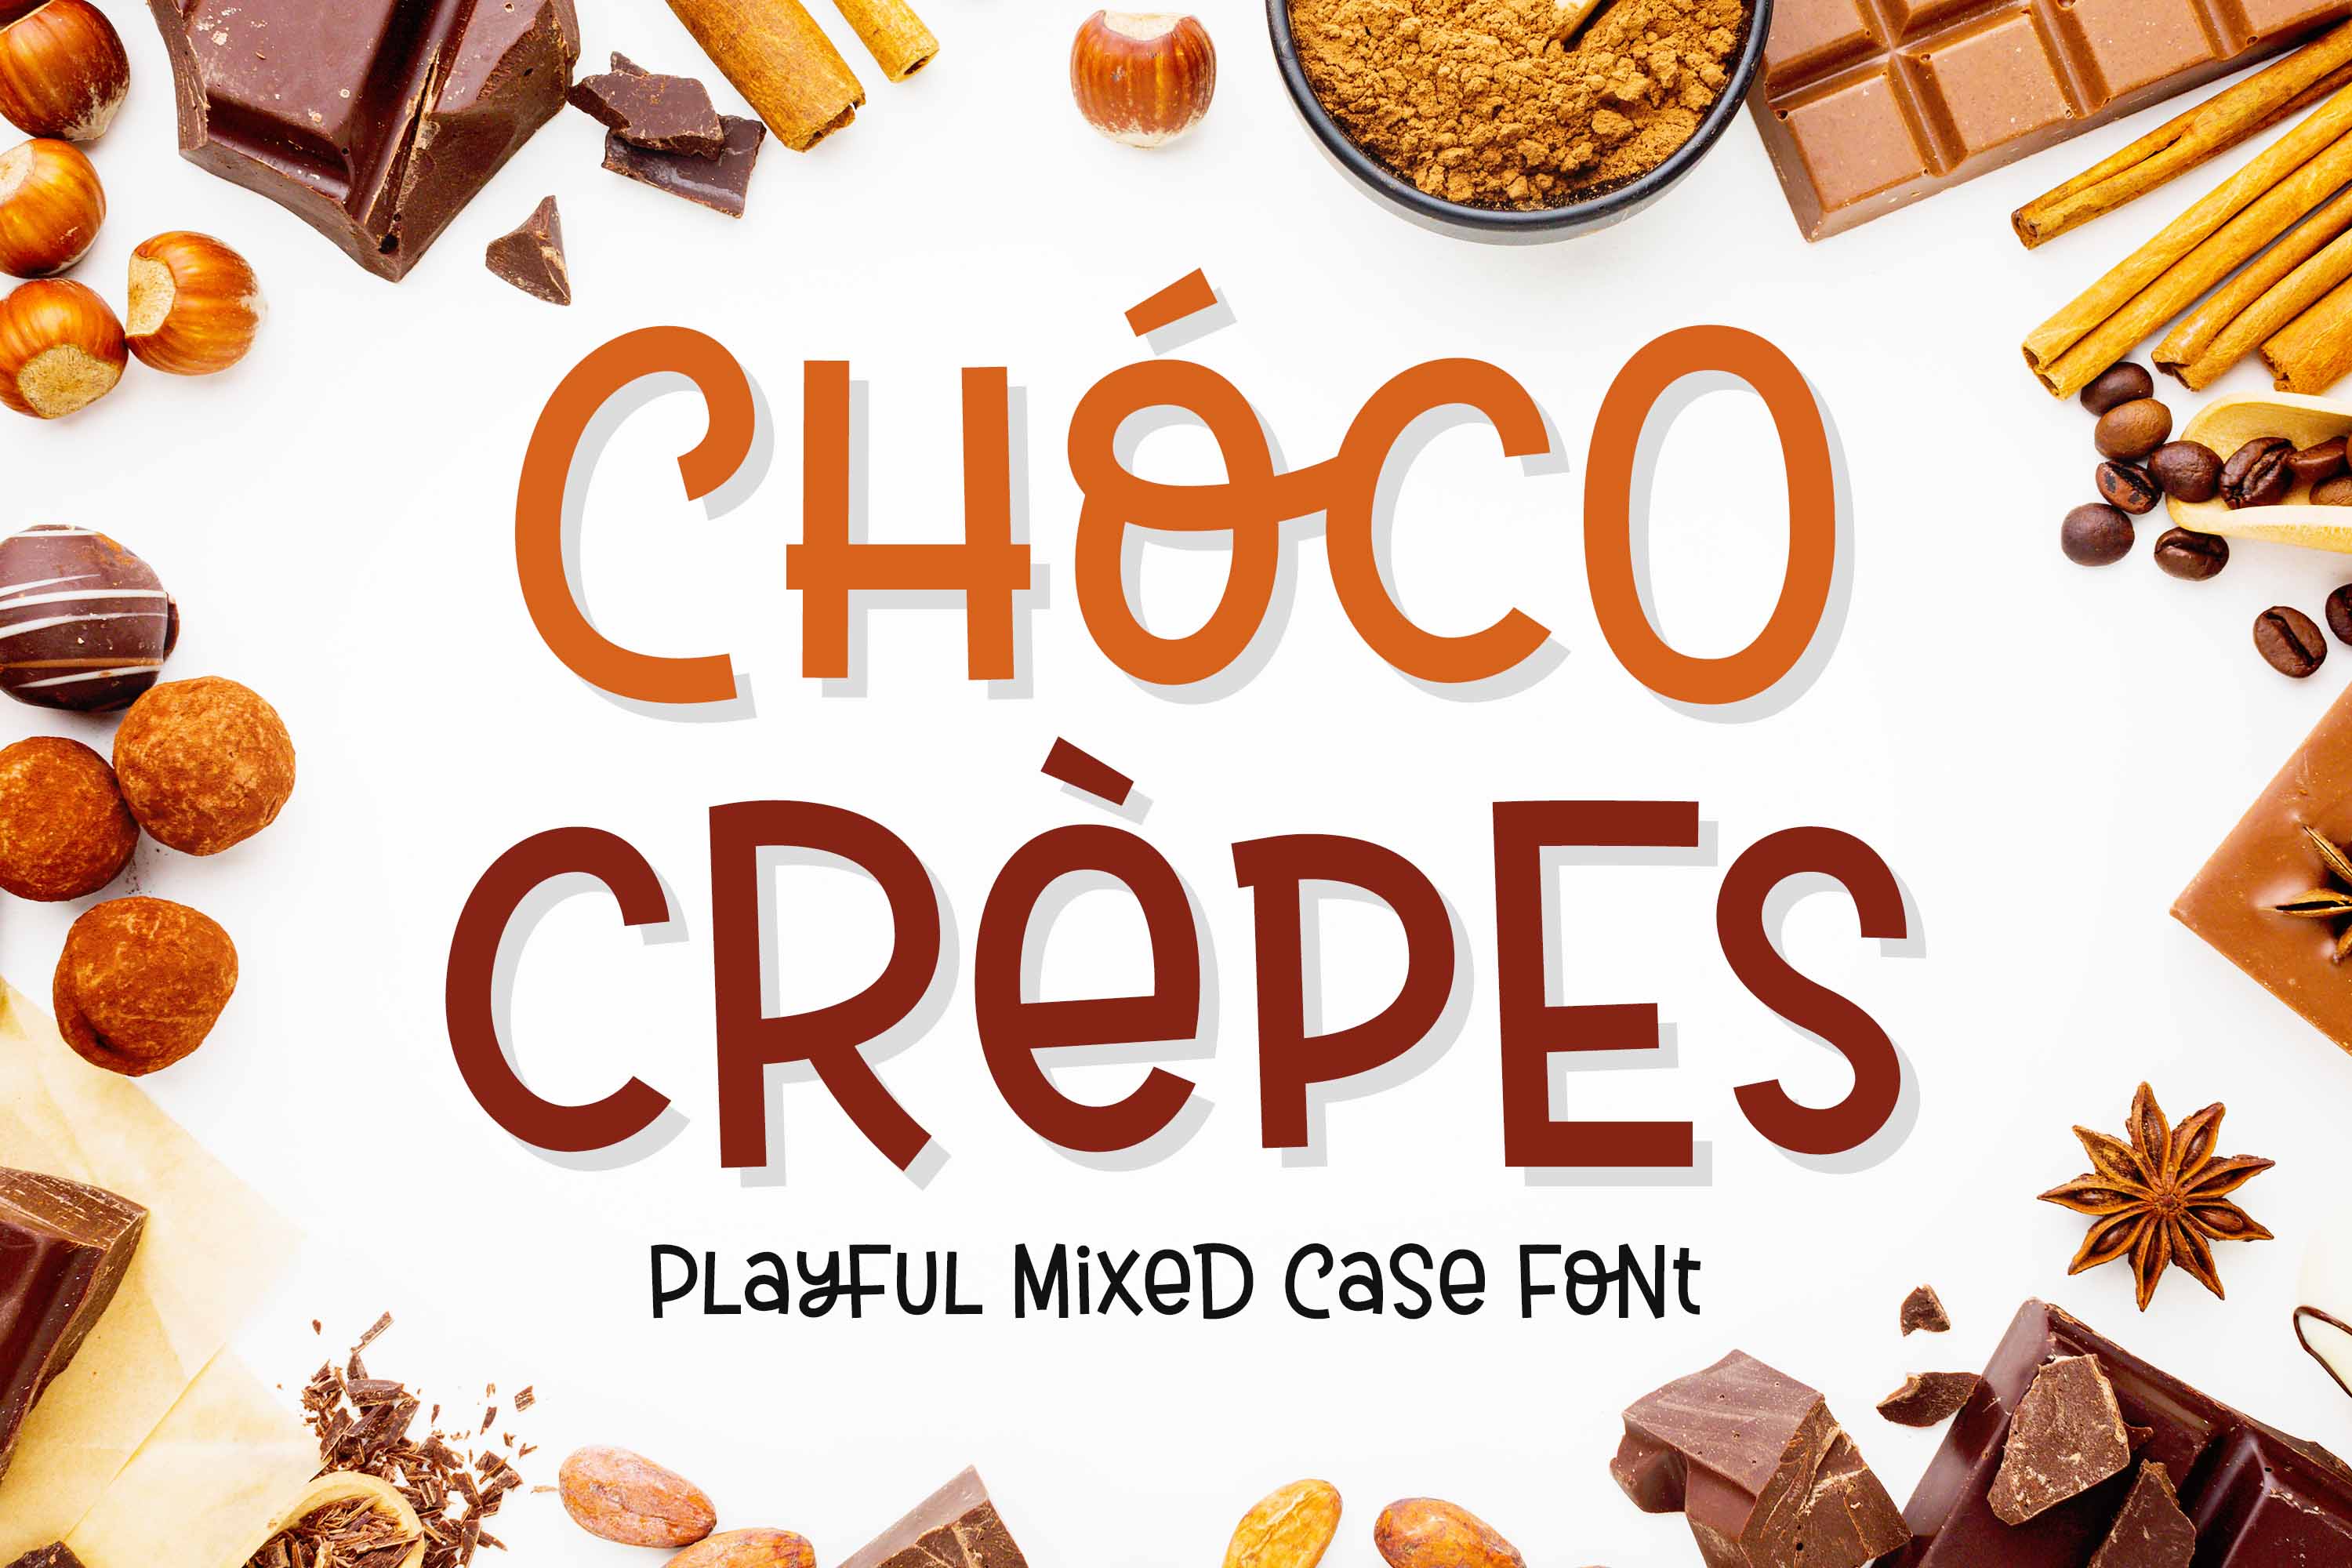 Choco Crepes